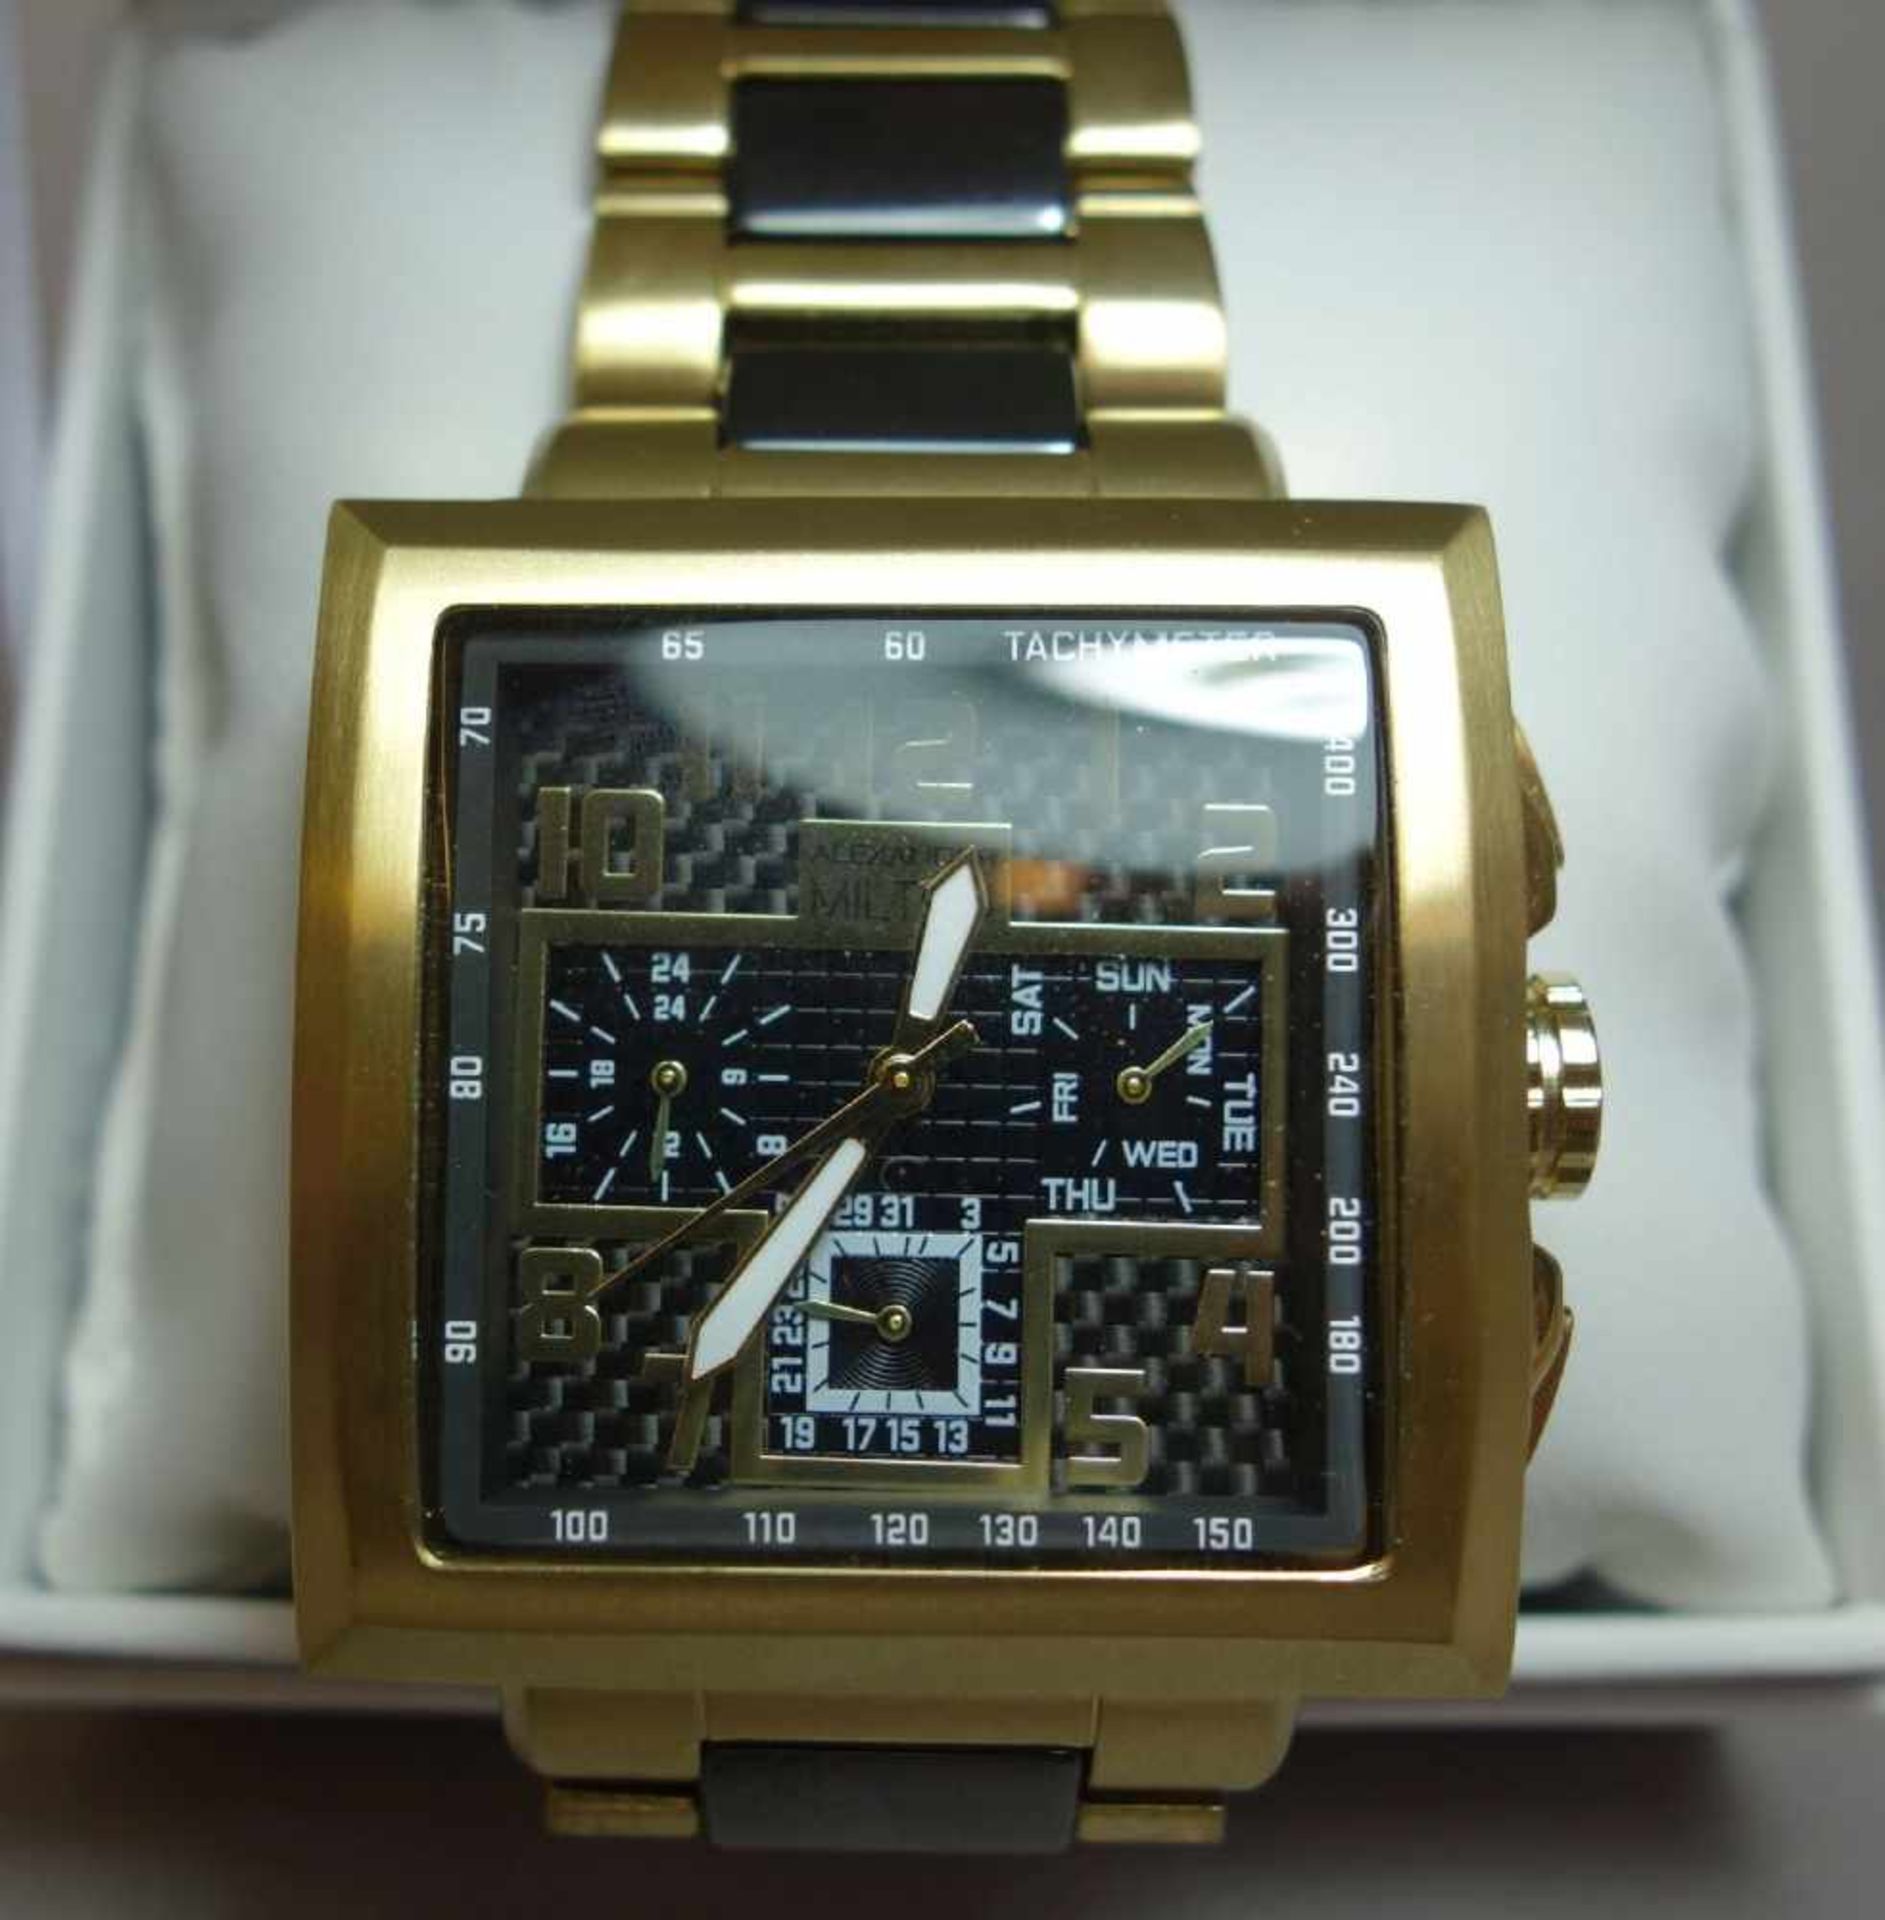 KERAMIK-ARMBANDUHR ALEXANDER MILTON - CHRONOGRAPH / wristwatch, Quarz-Uhr, Modell "Priamos", - Image 4 of 6